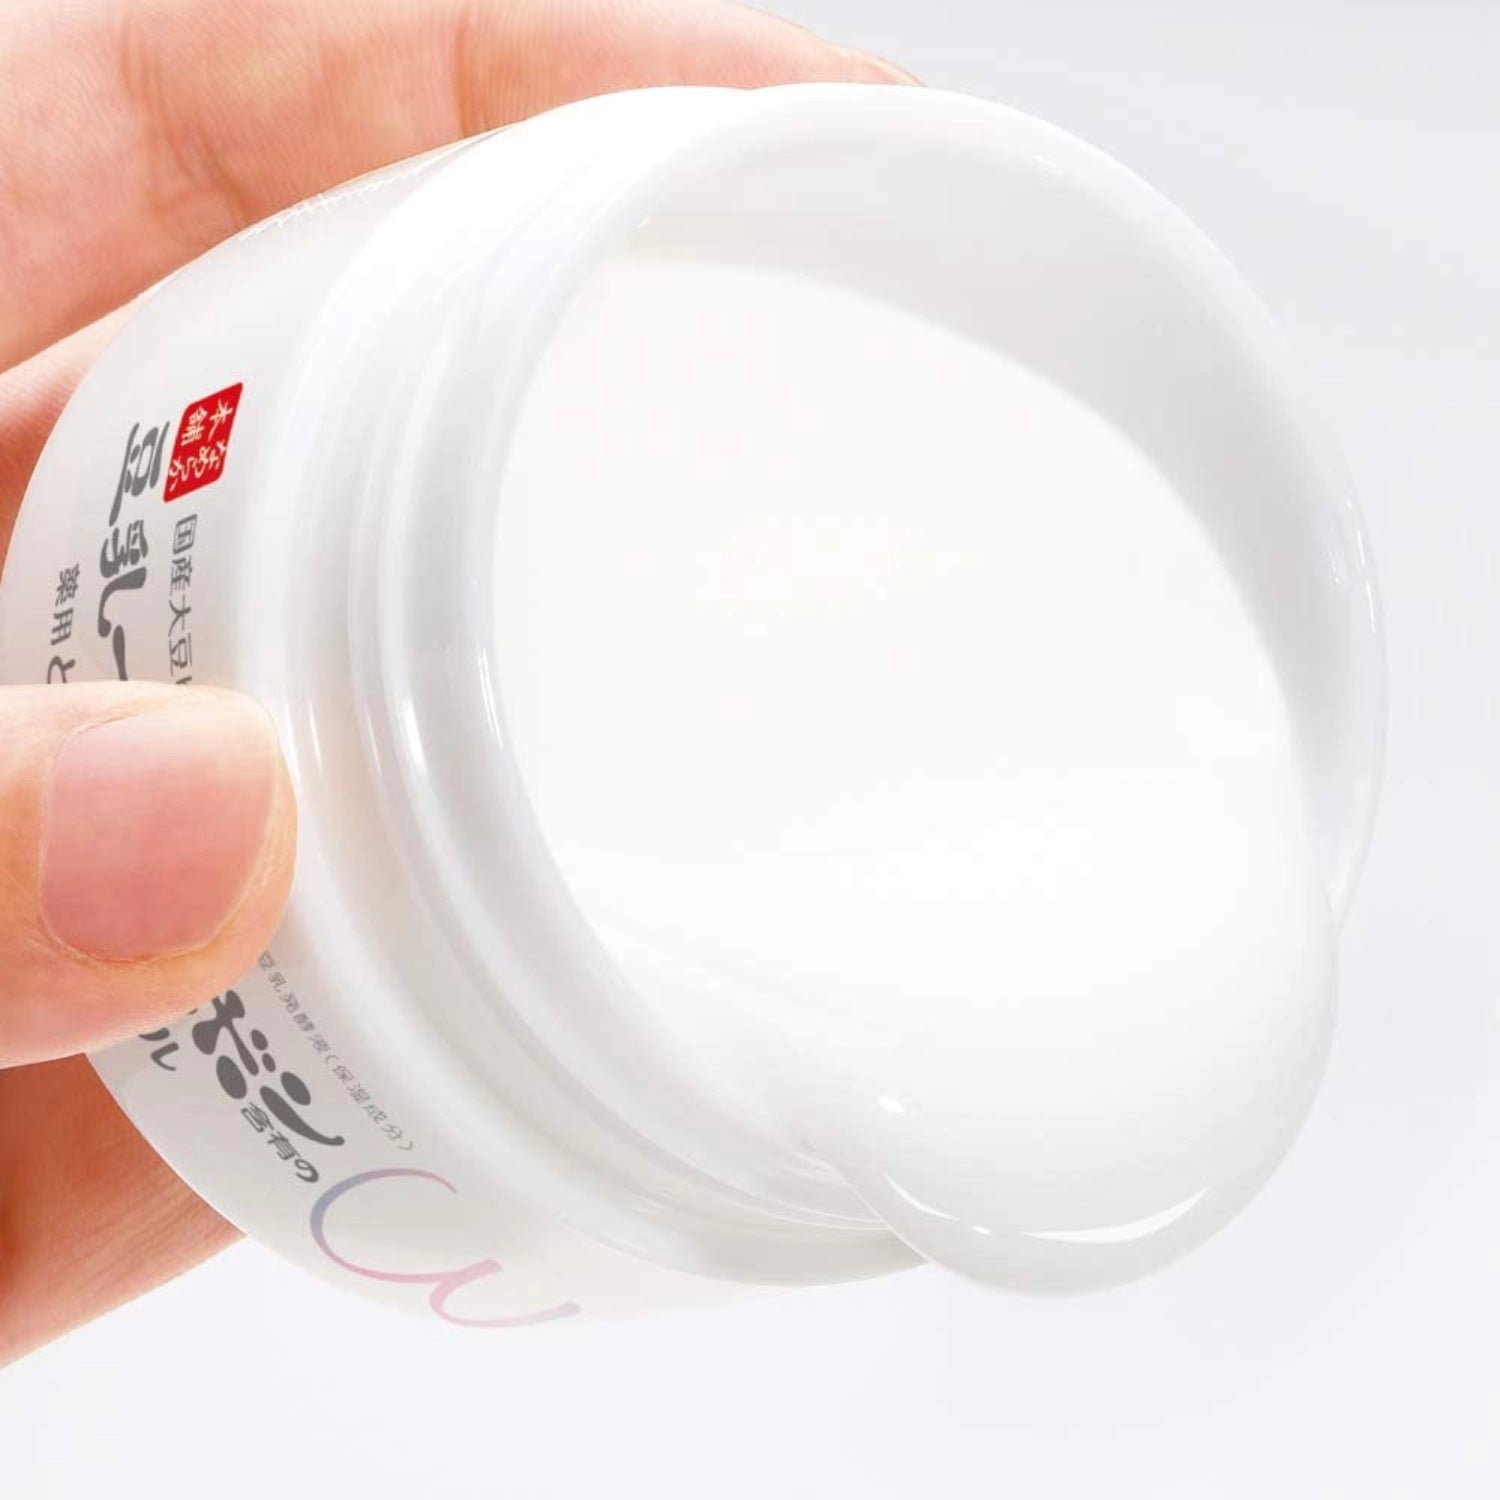 Sana Soy Isoflavones Whitening & Acne Care Gel Cream 100g - Buy Me Japan